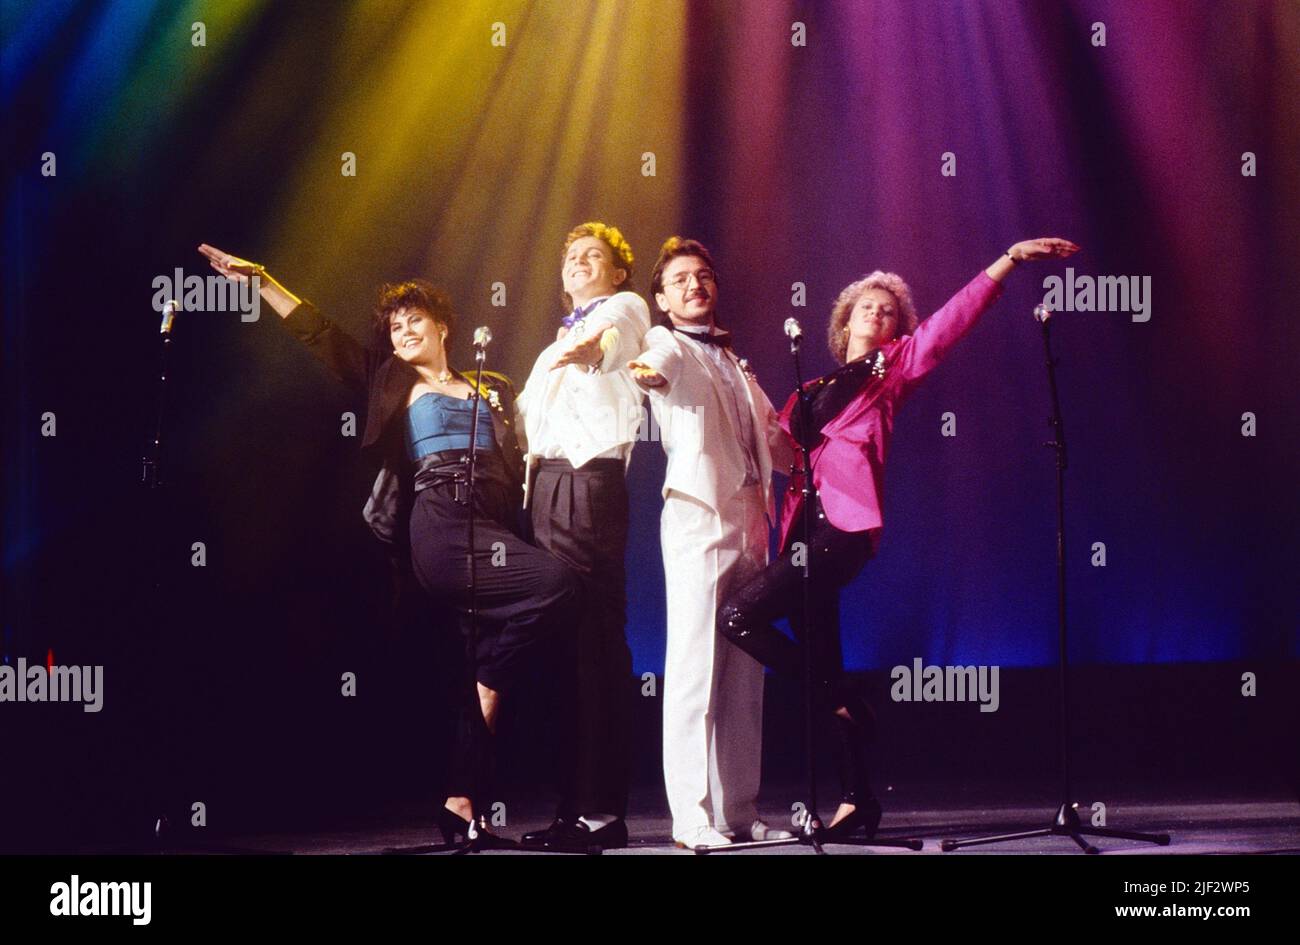 Starlight, Gesangsgruppe, hier bei einem Auftritt, Deutschland, 1990. Starlight, vocal group, here at a performance, Germany, 1990. Stock Photo